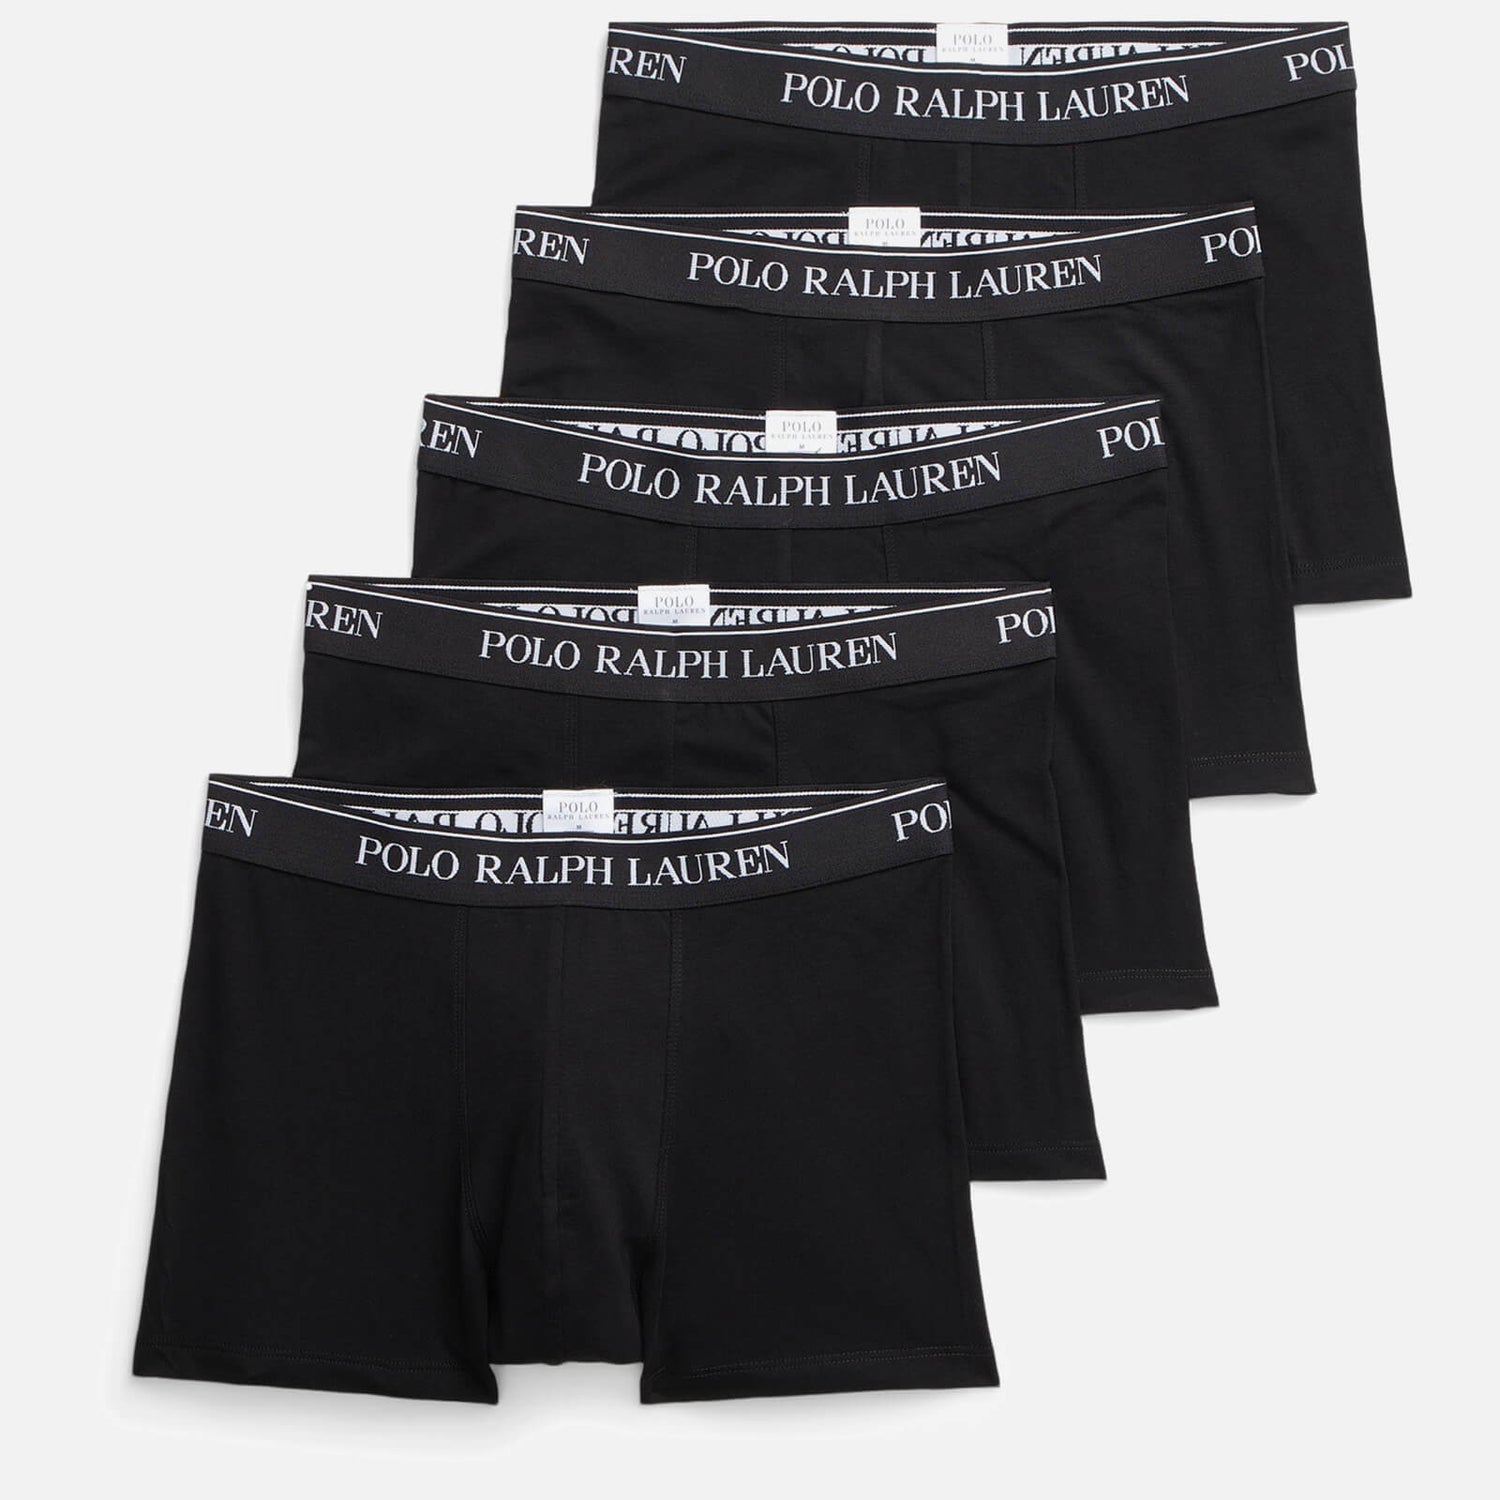 Polo Ralph Lauren Men's 5 Pack Trunk Boxer Shorts - Black - XXL - S